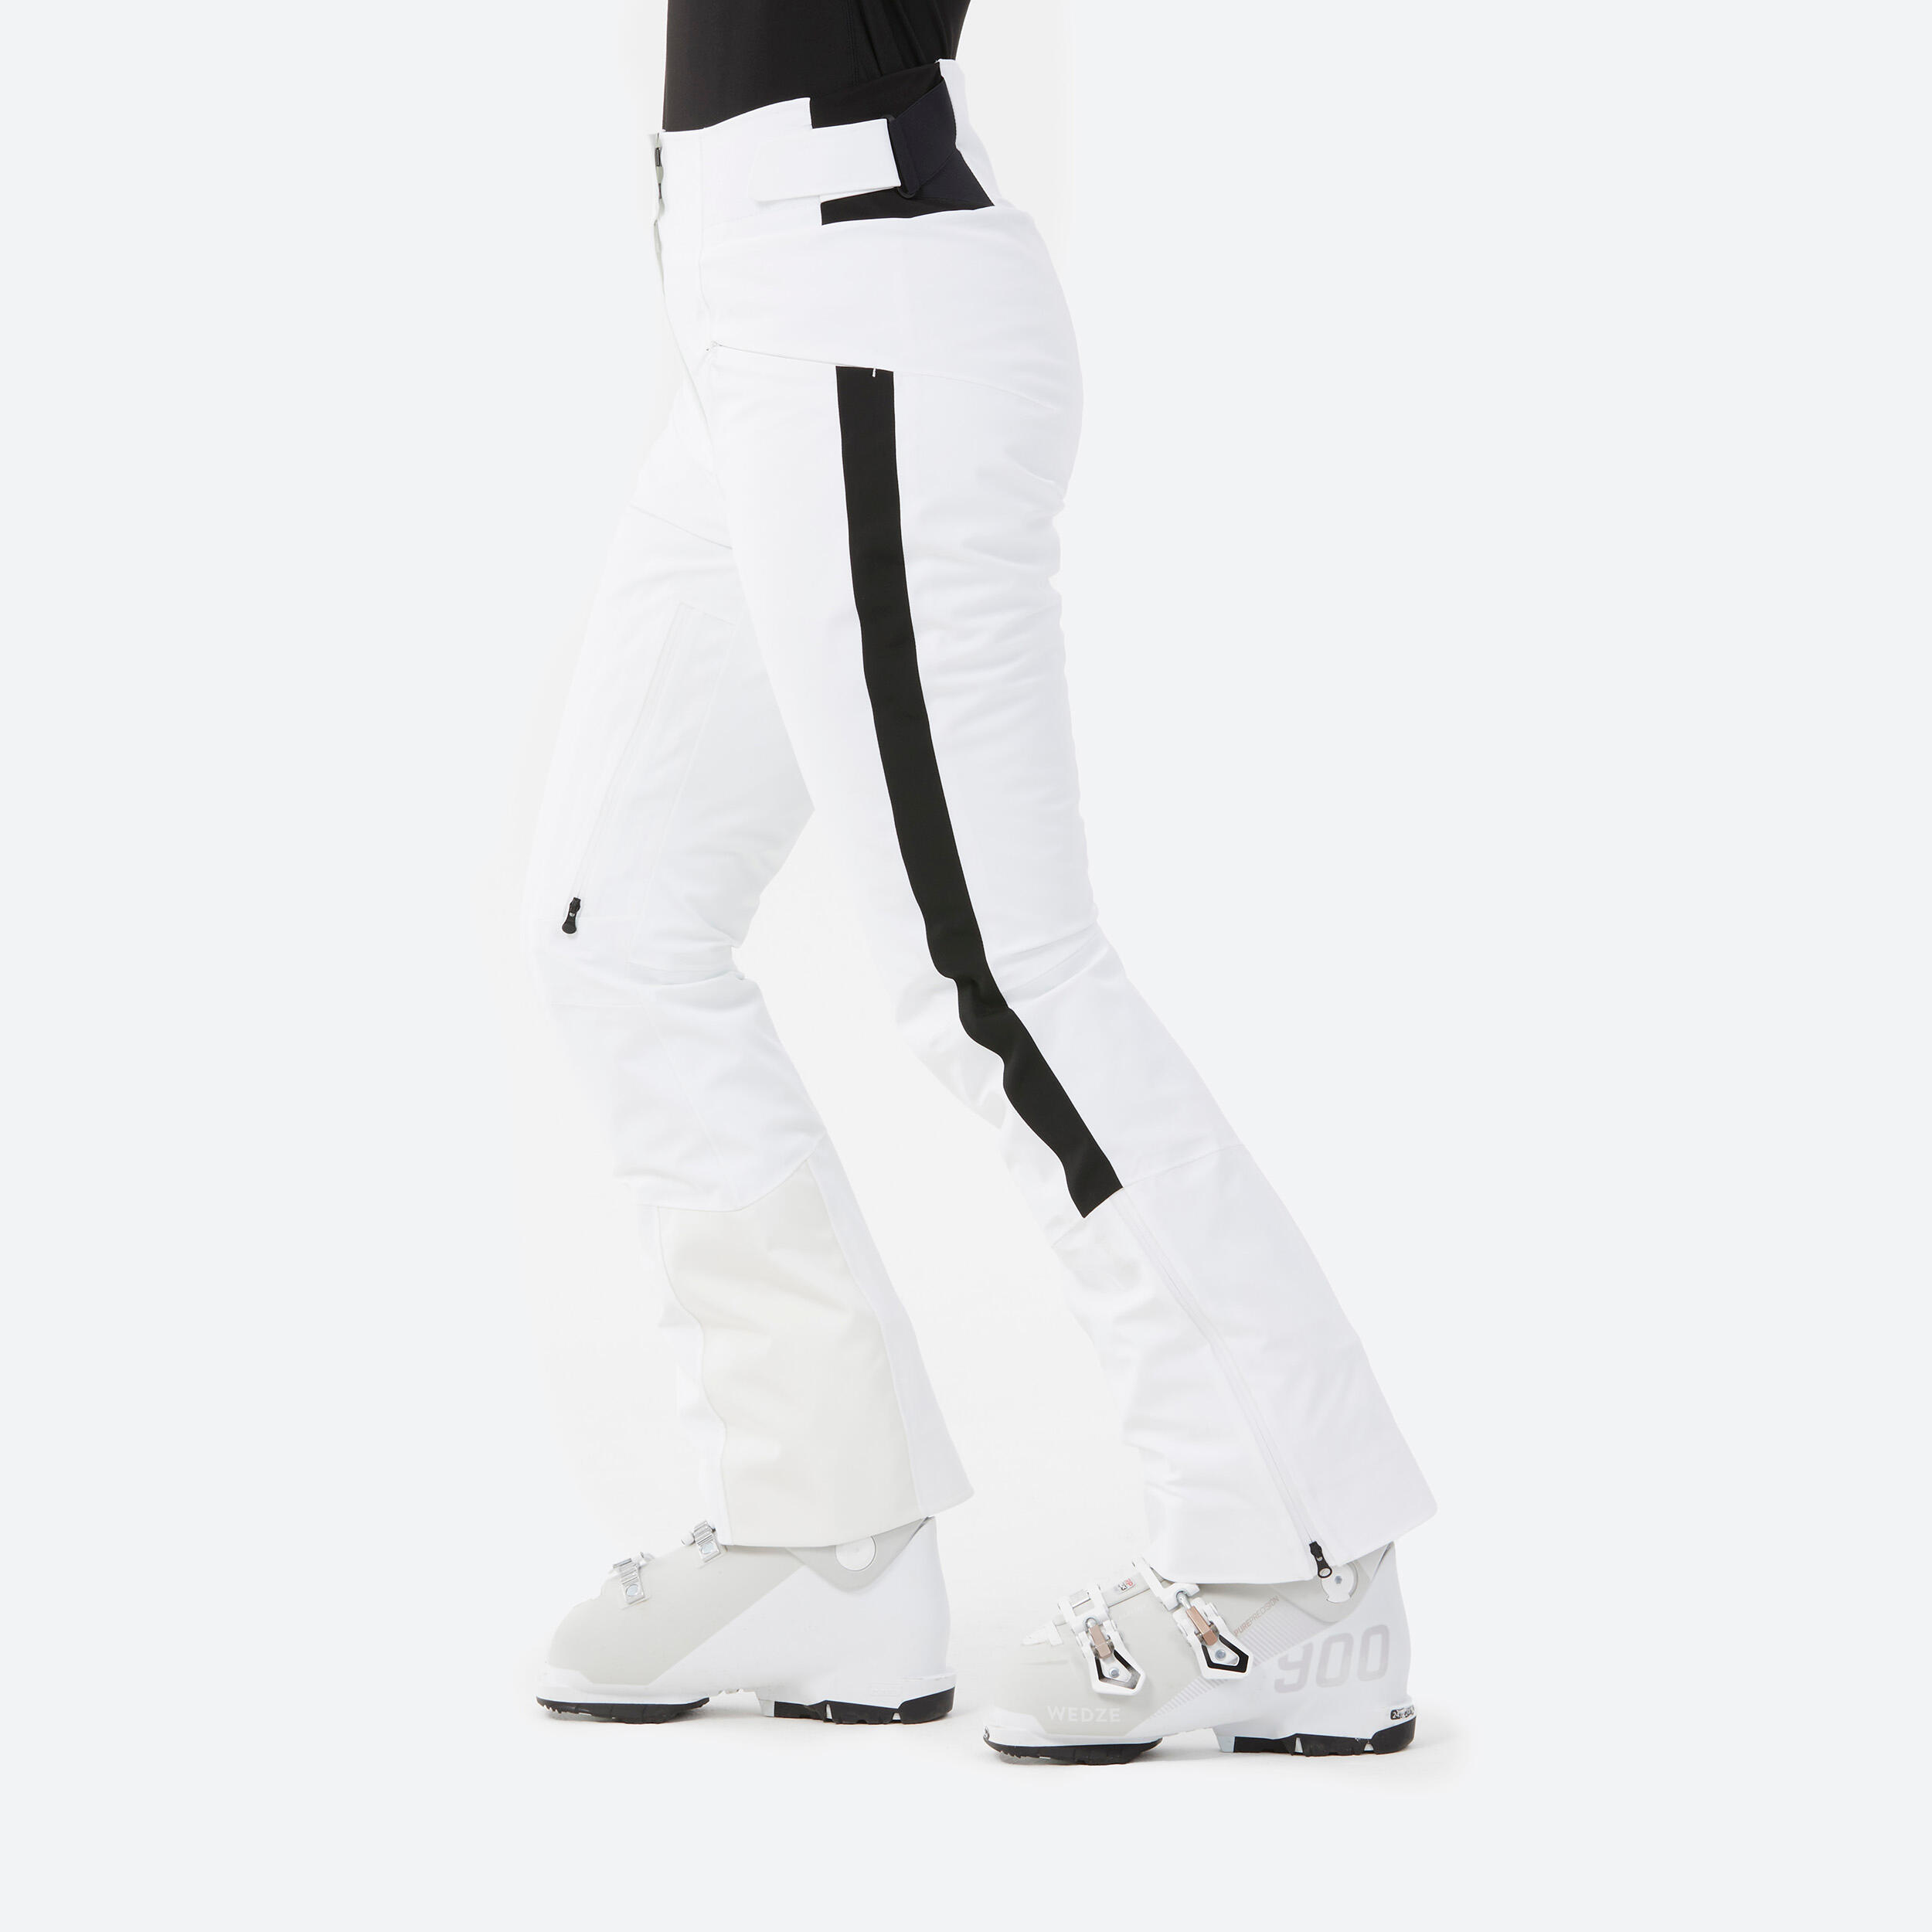 Women’s Ski Trousers 900 - White 4/15